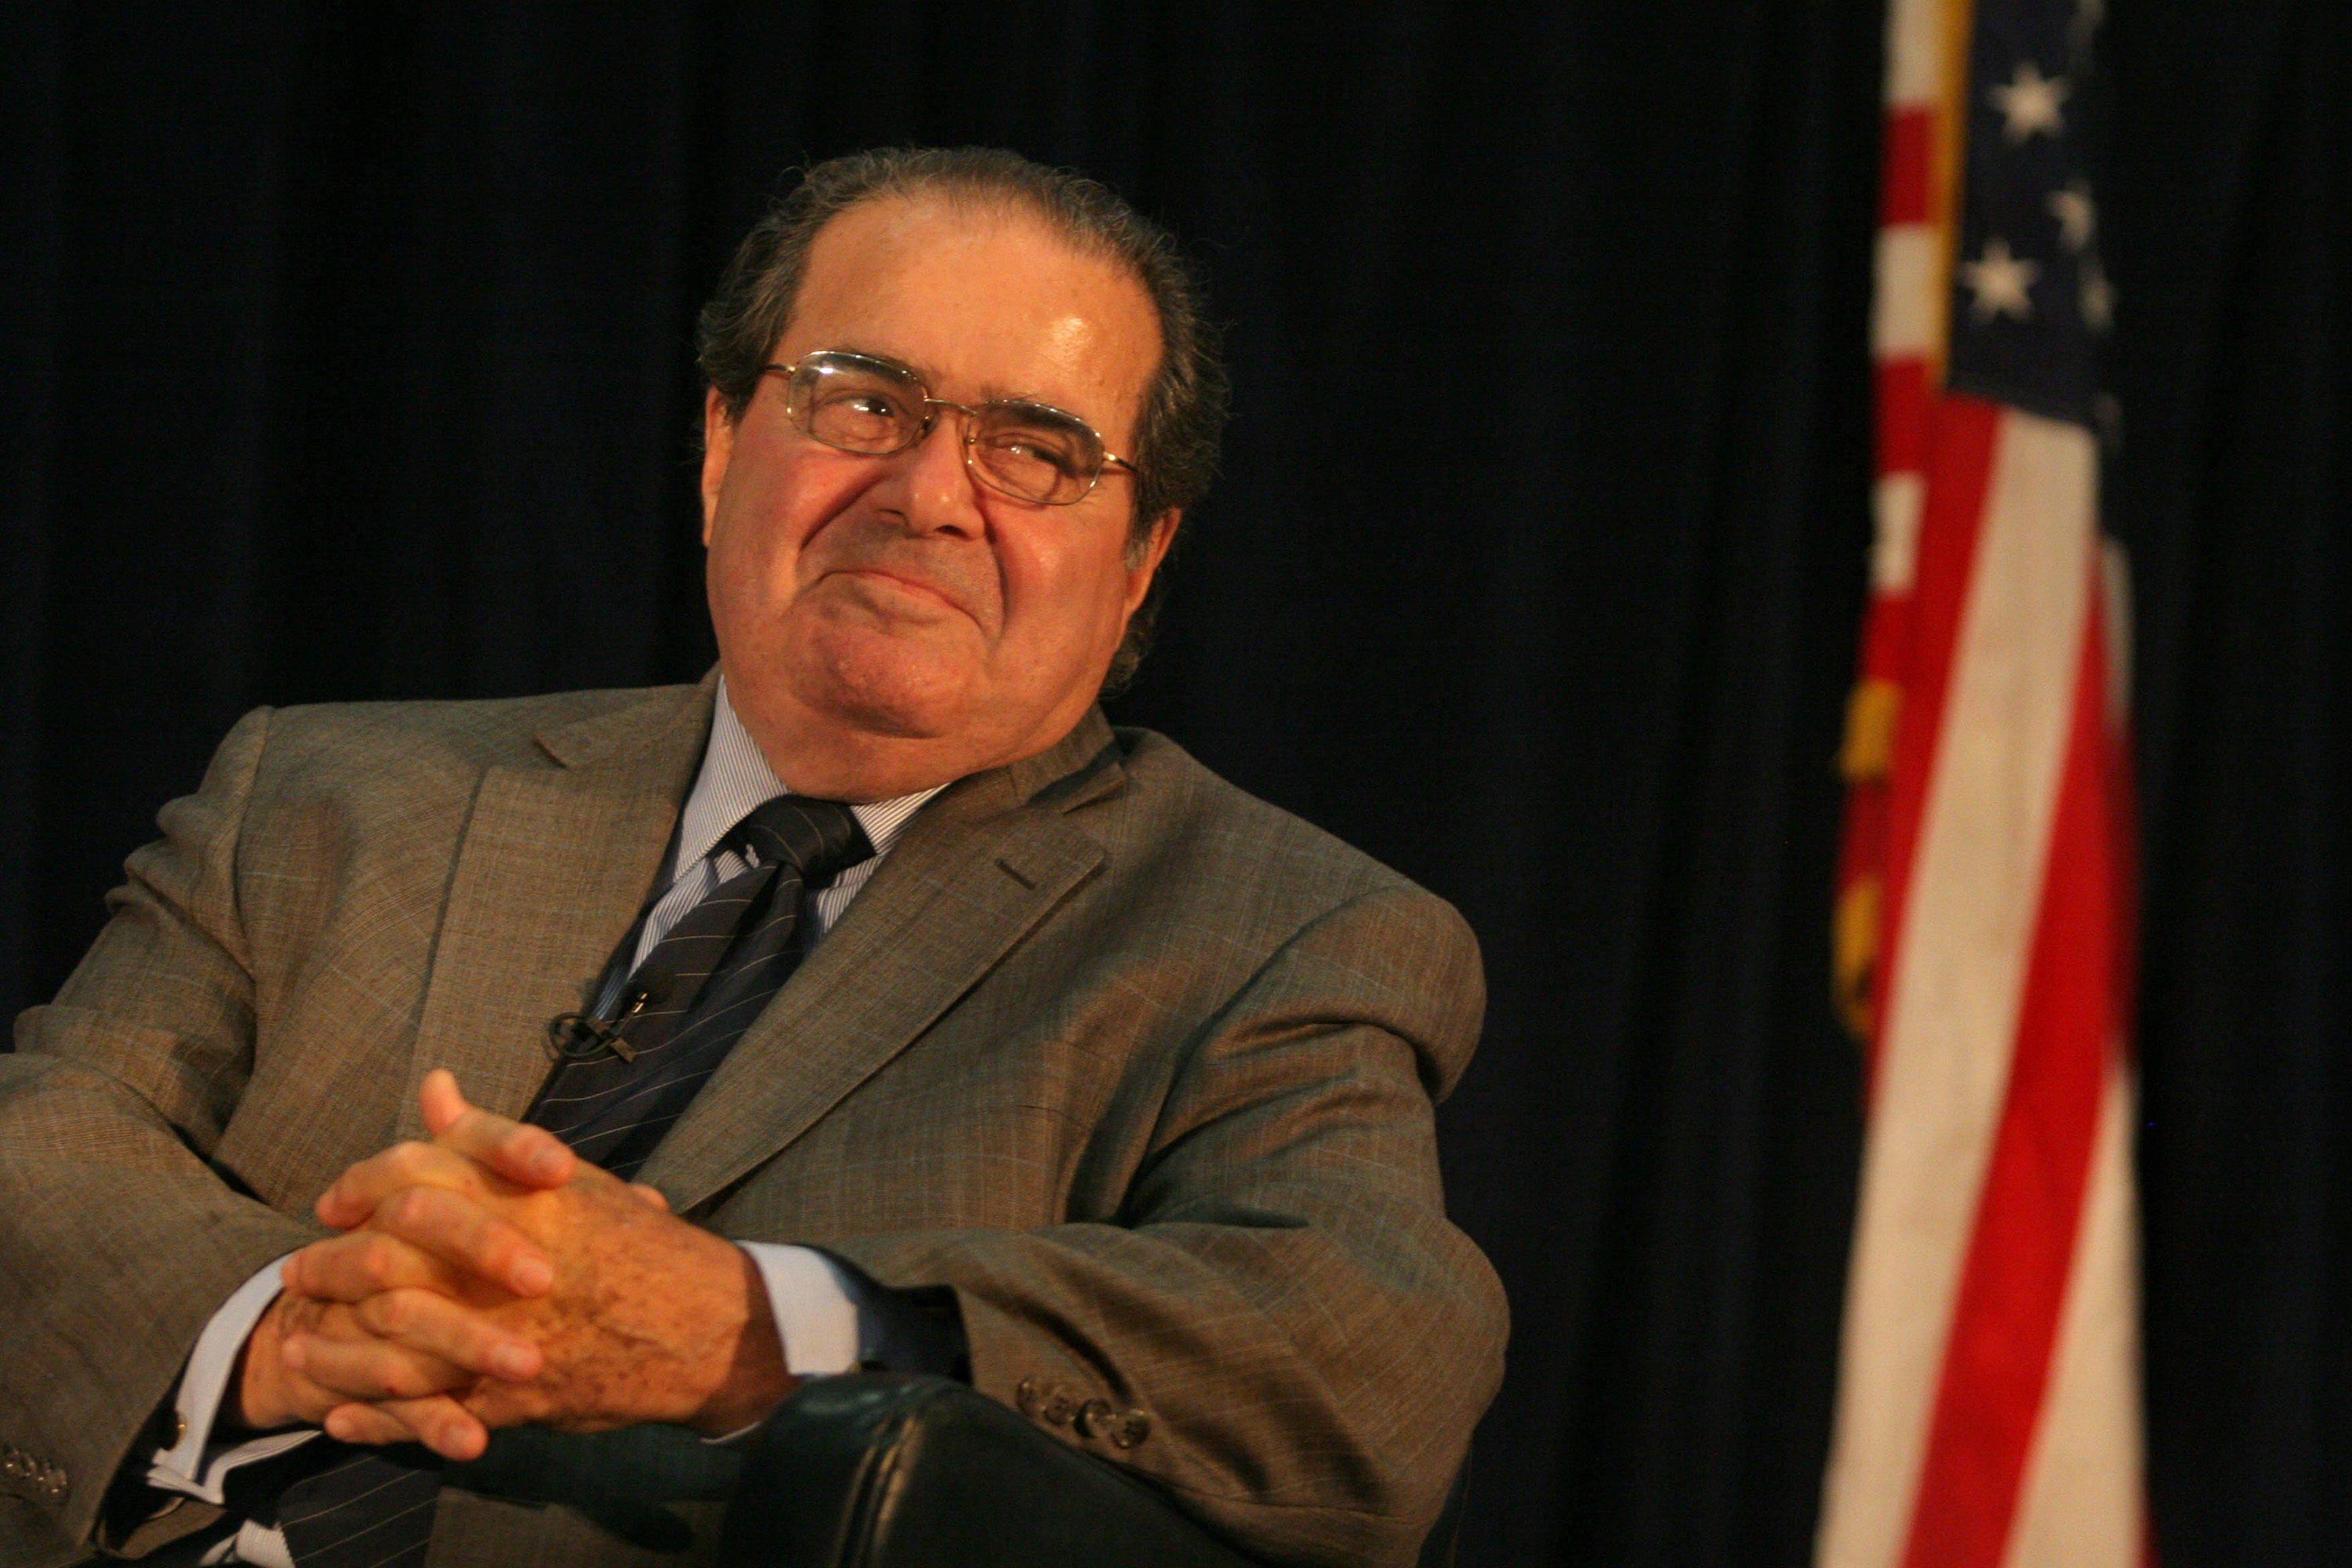 Antonin Scalia, Supreme Court justice, dies at 79